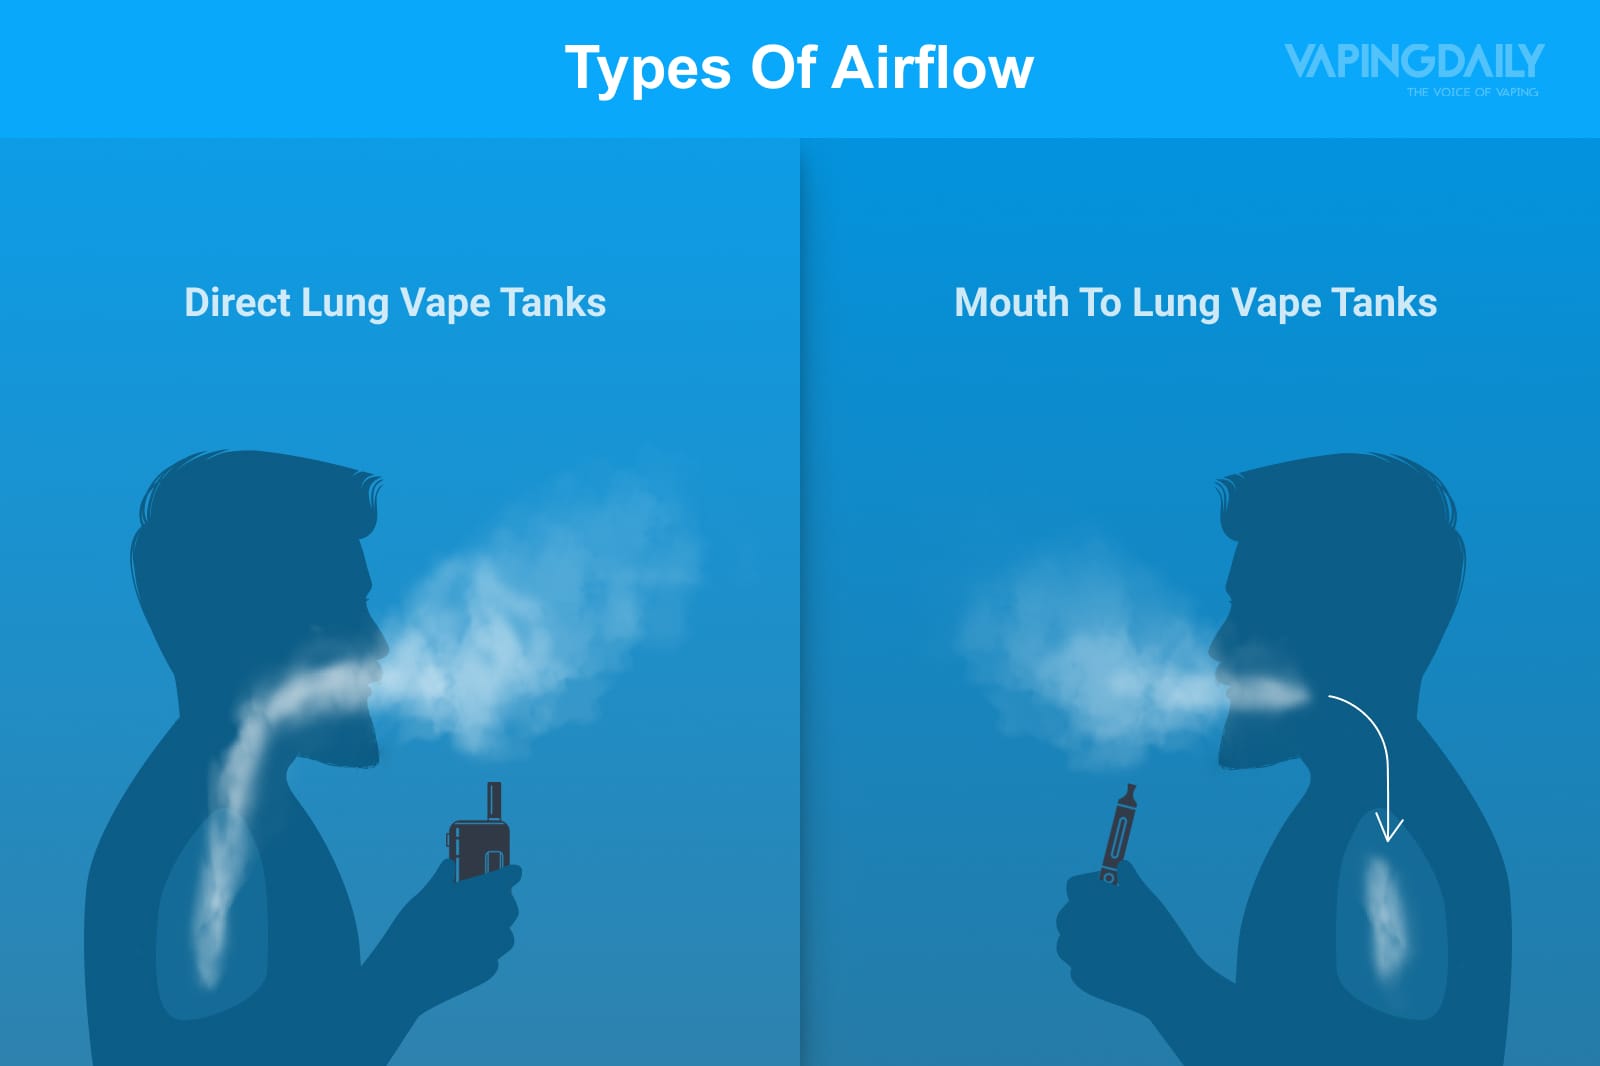 Types of Airflow image